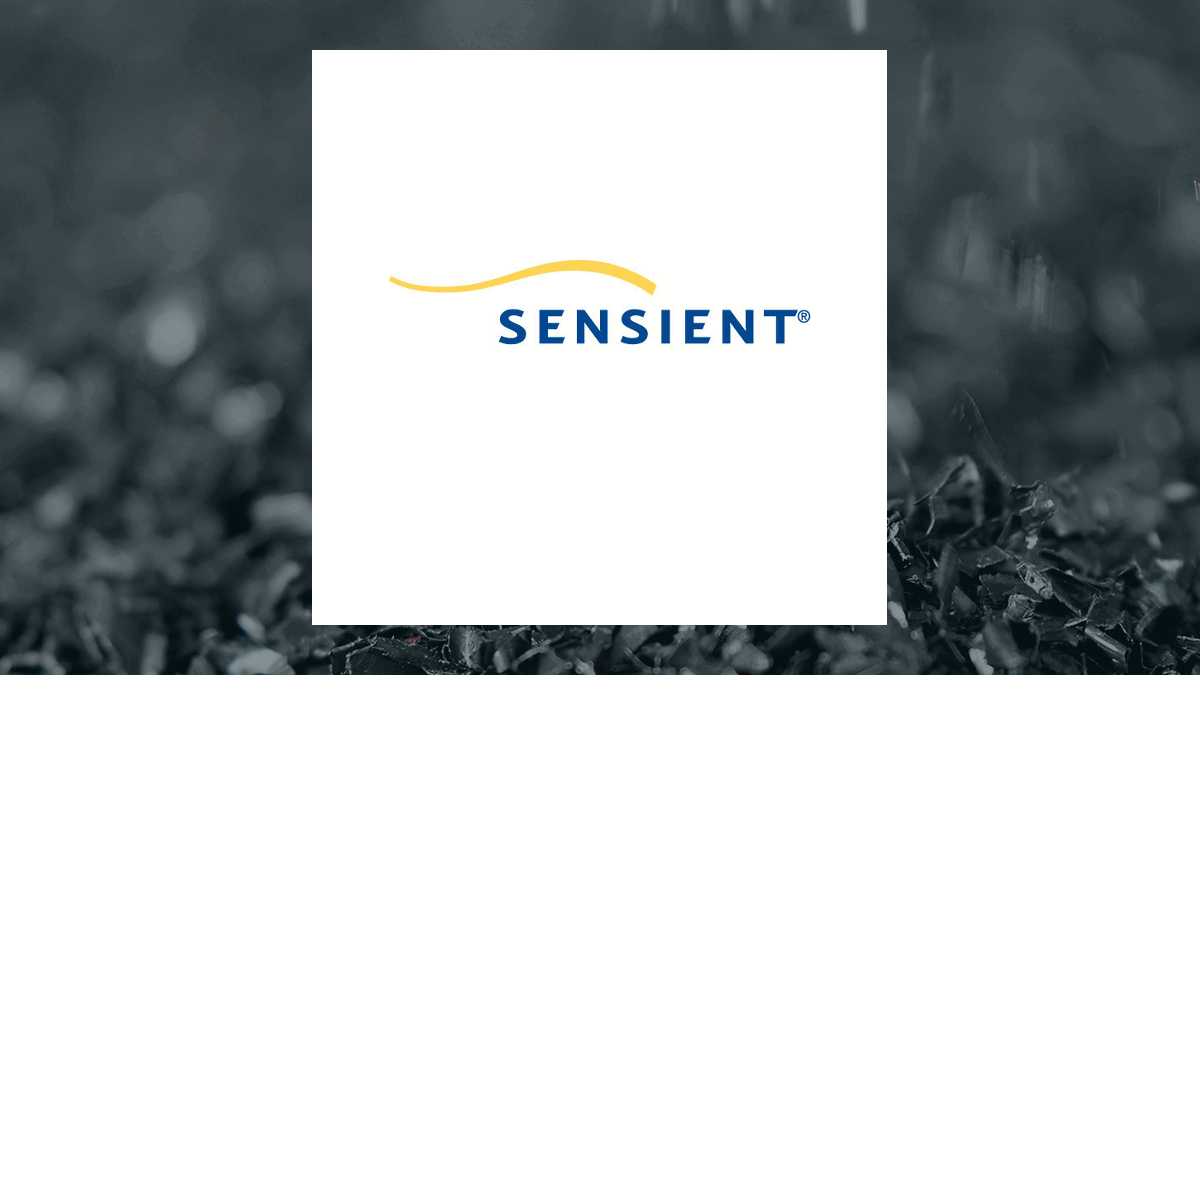 Sensient Technologies logo